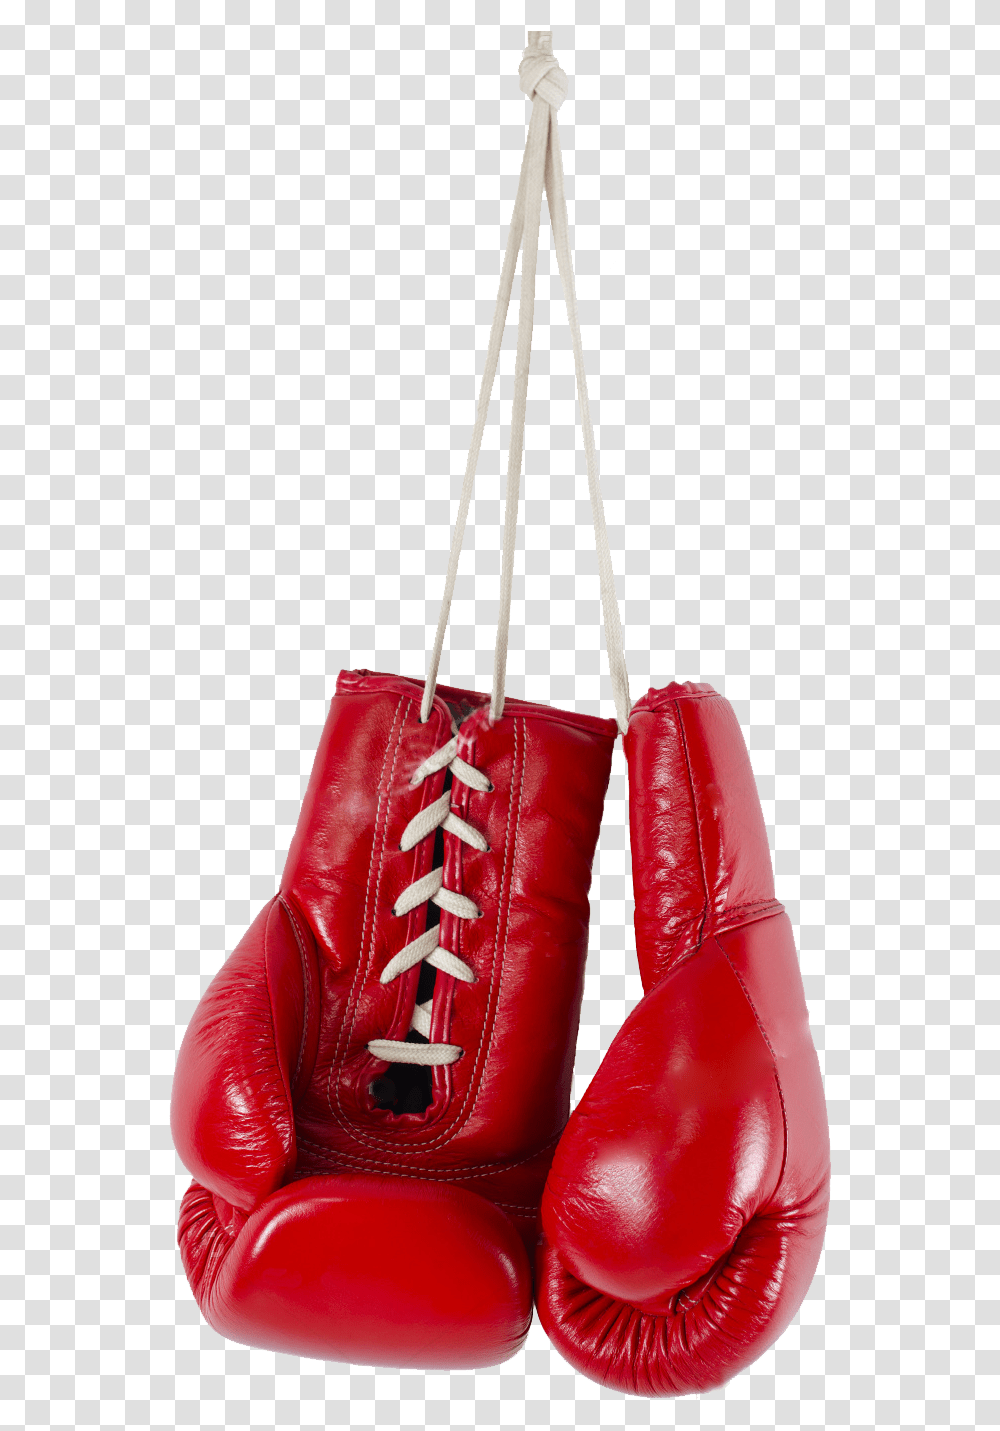 Boxing Gloves Download Glove, Clothing, Apparel, Handbag, Accessories Transparent Png